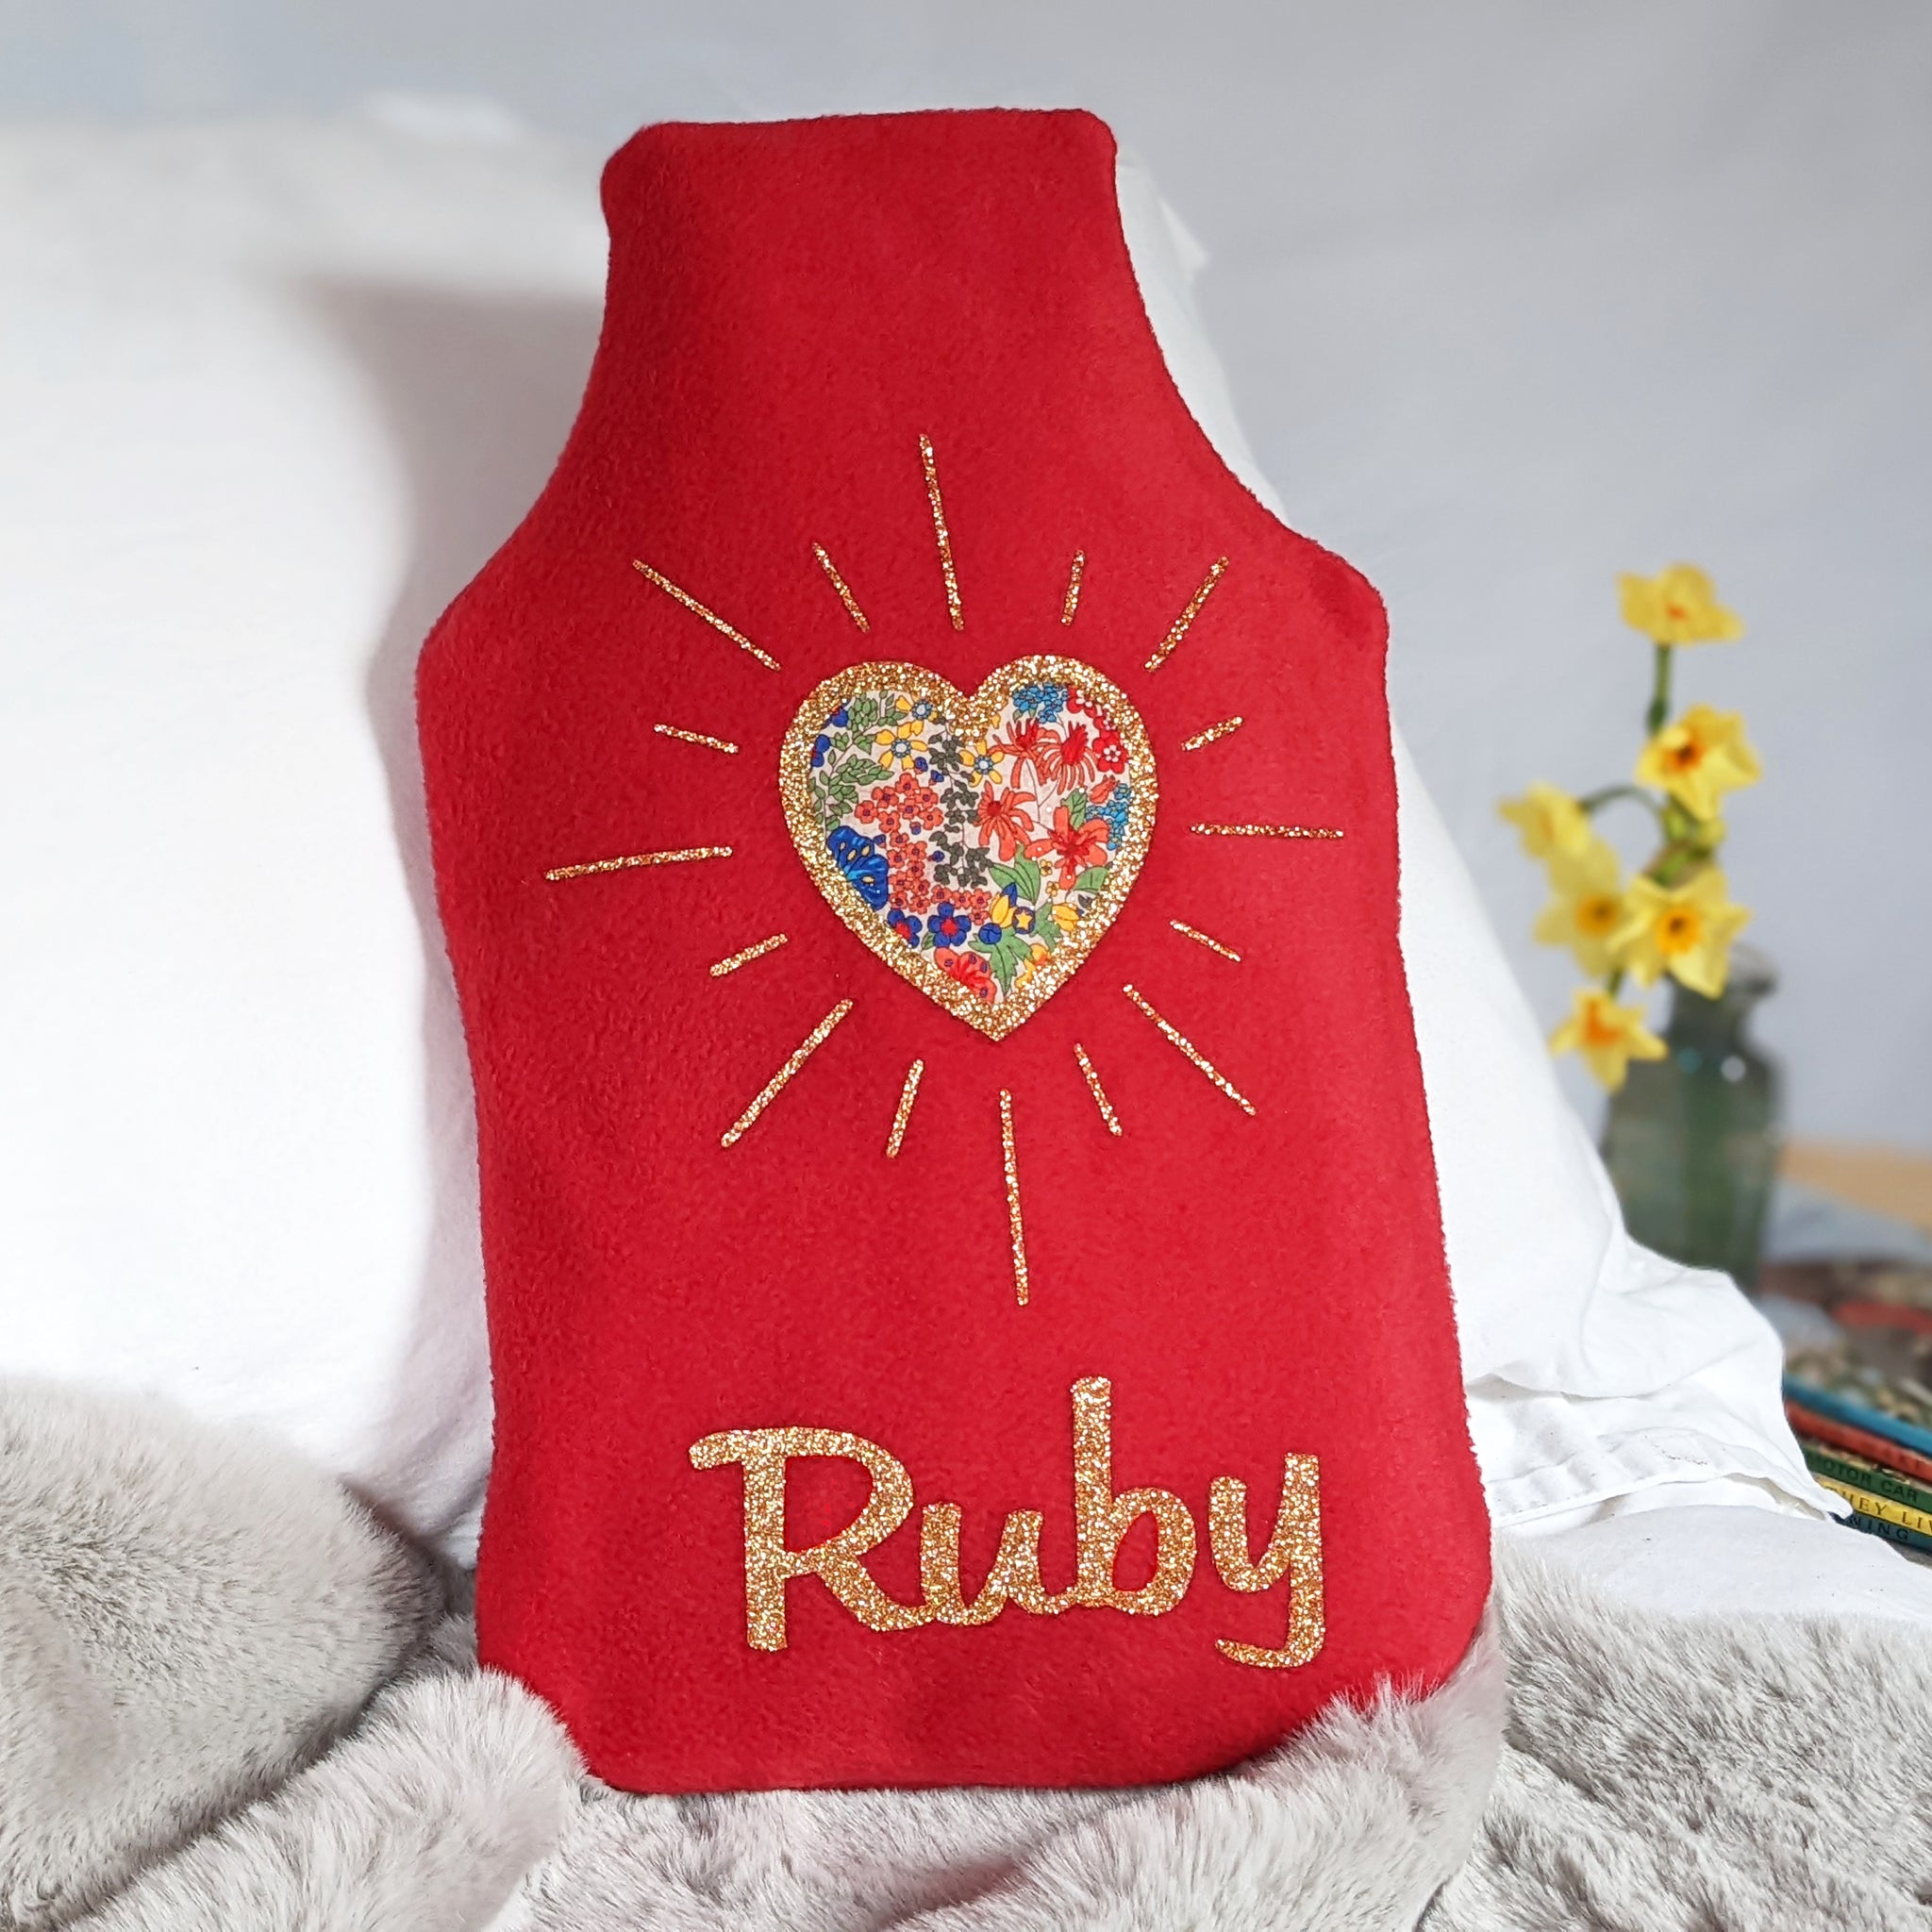 Liberty Sunburst Heart personalised hot water bottle cover